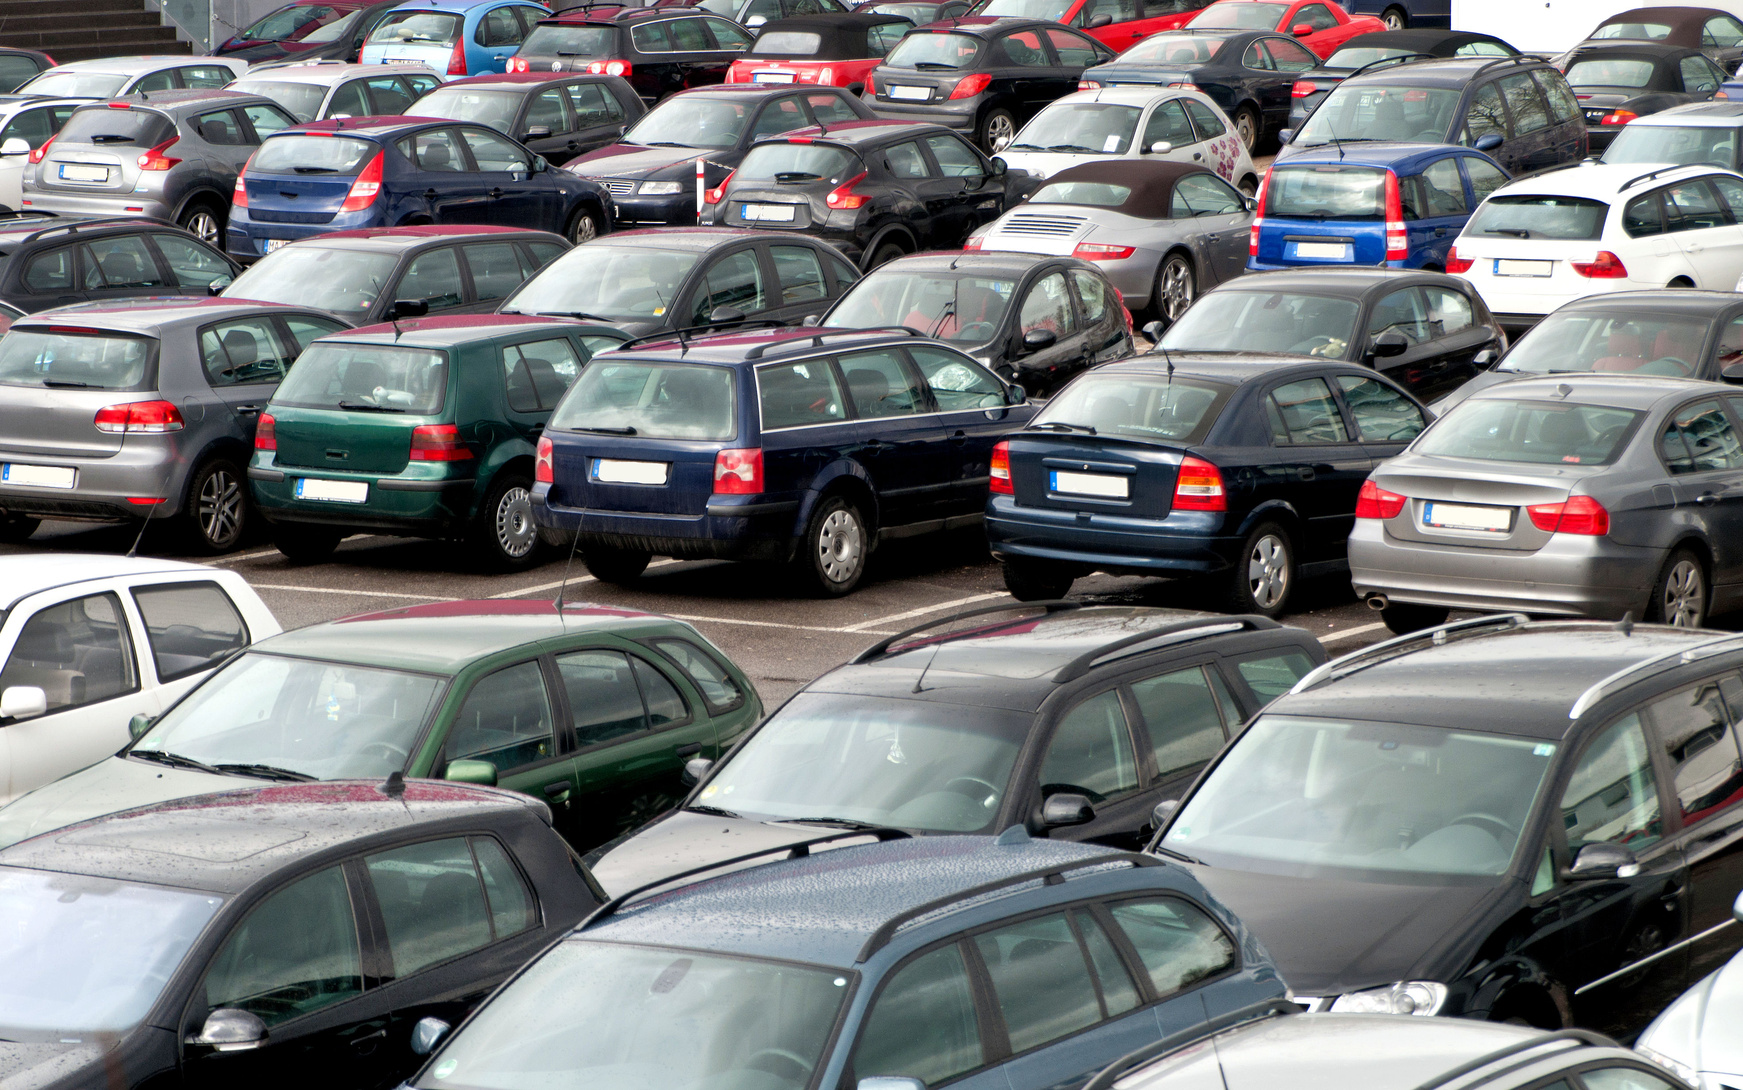 Many cars on a parking lot